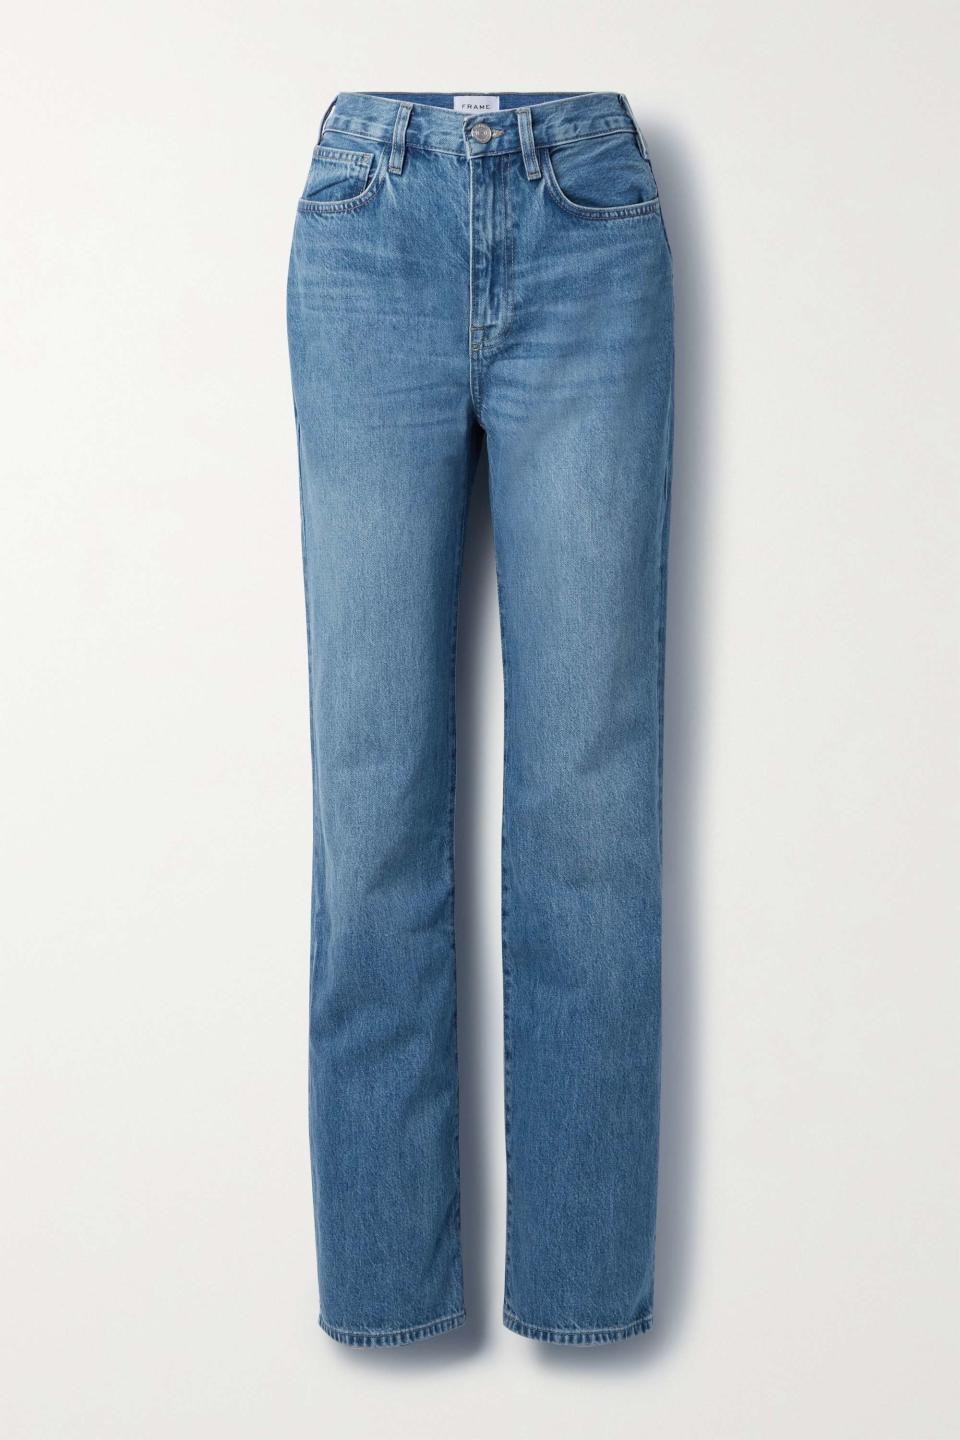 frame jeans